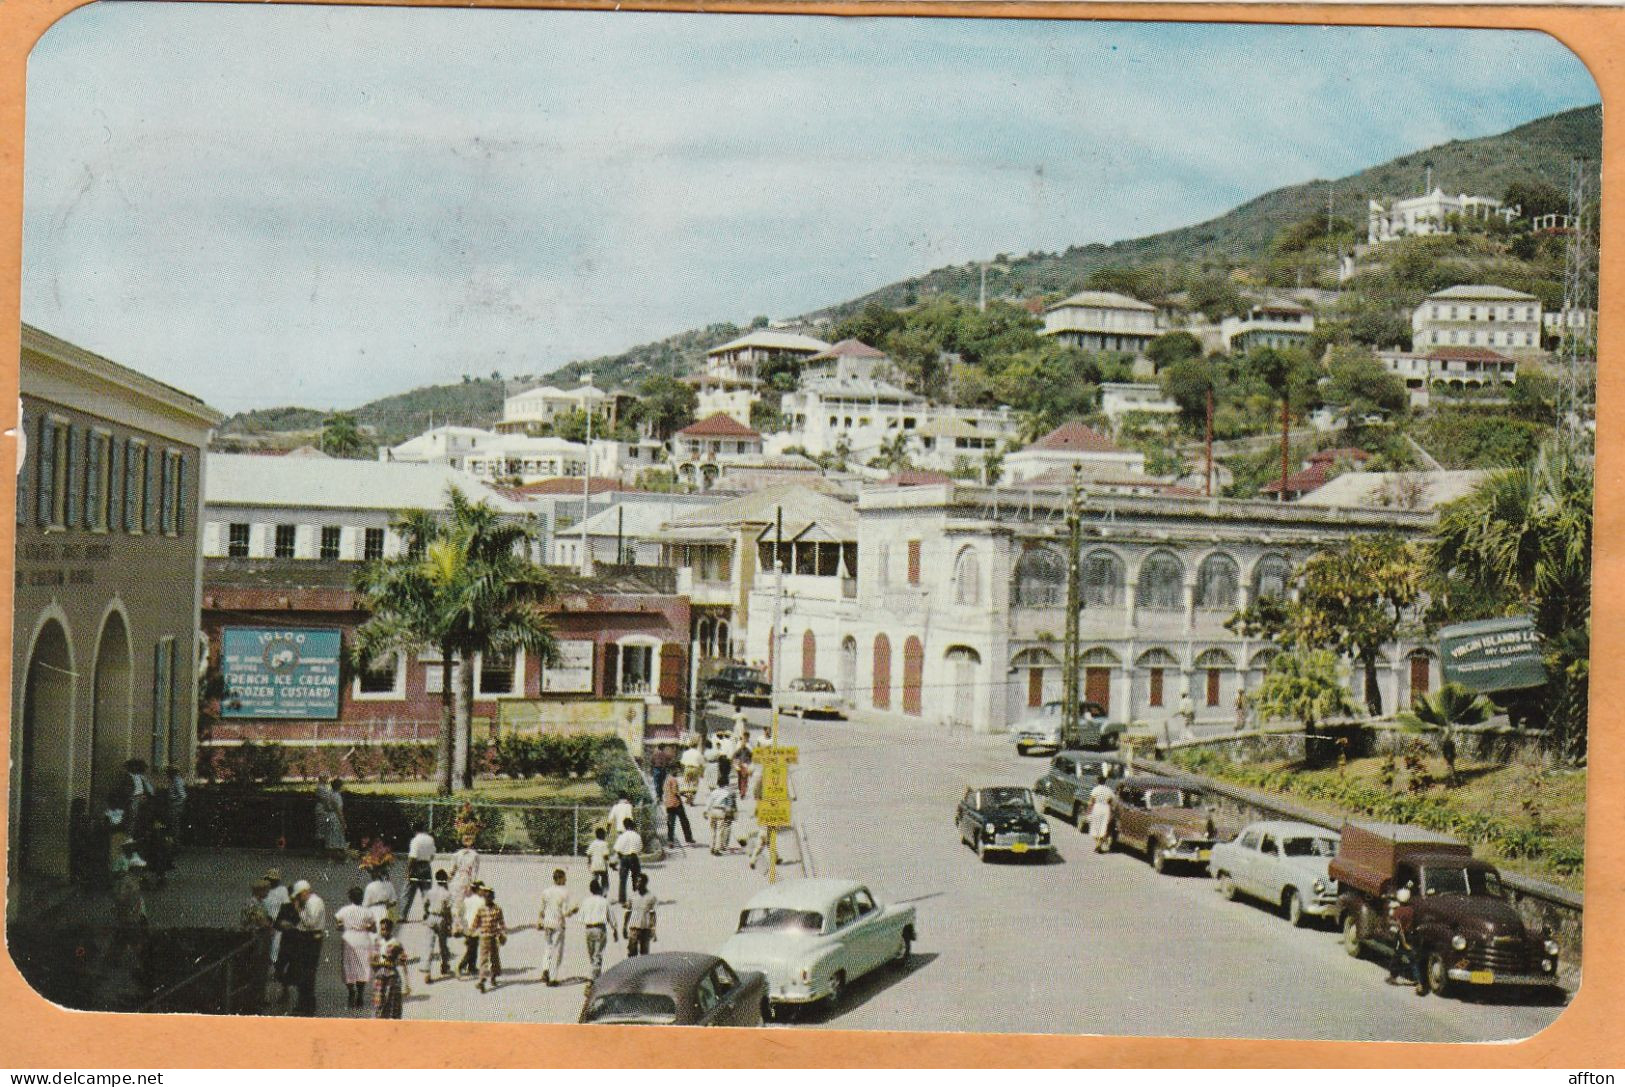 St Thomas IS VI Old Postcard Mailed - Jungferninseln, Amerik.